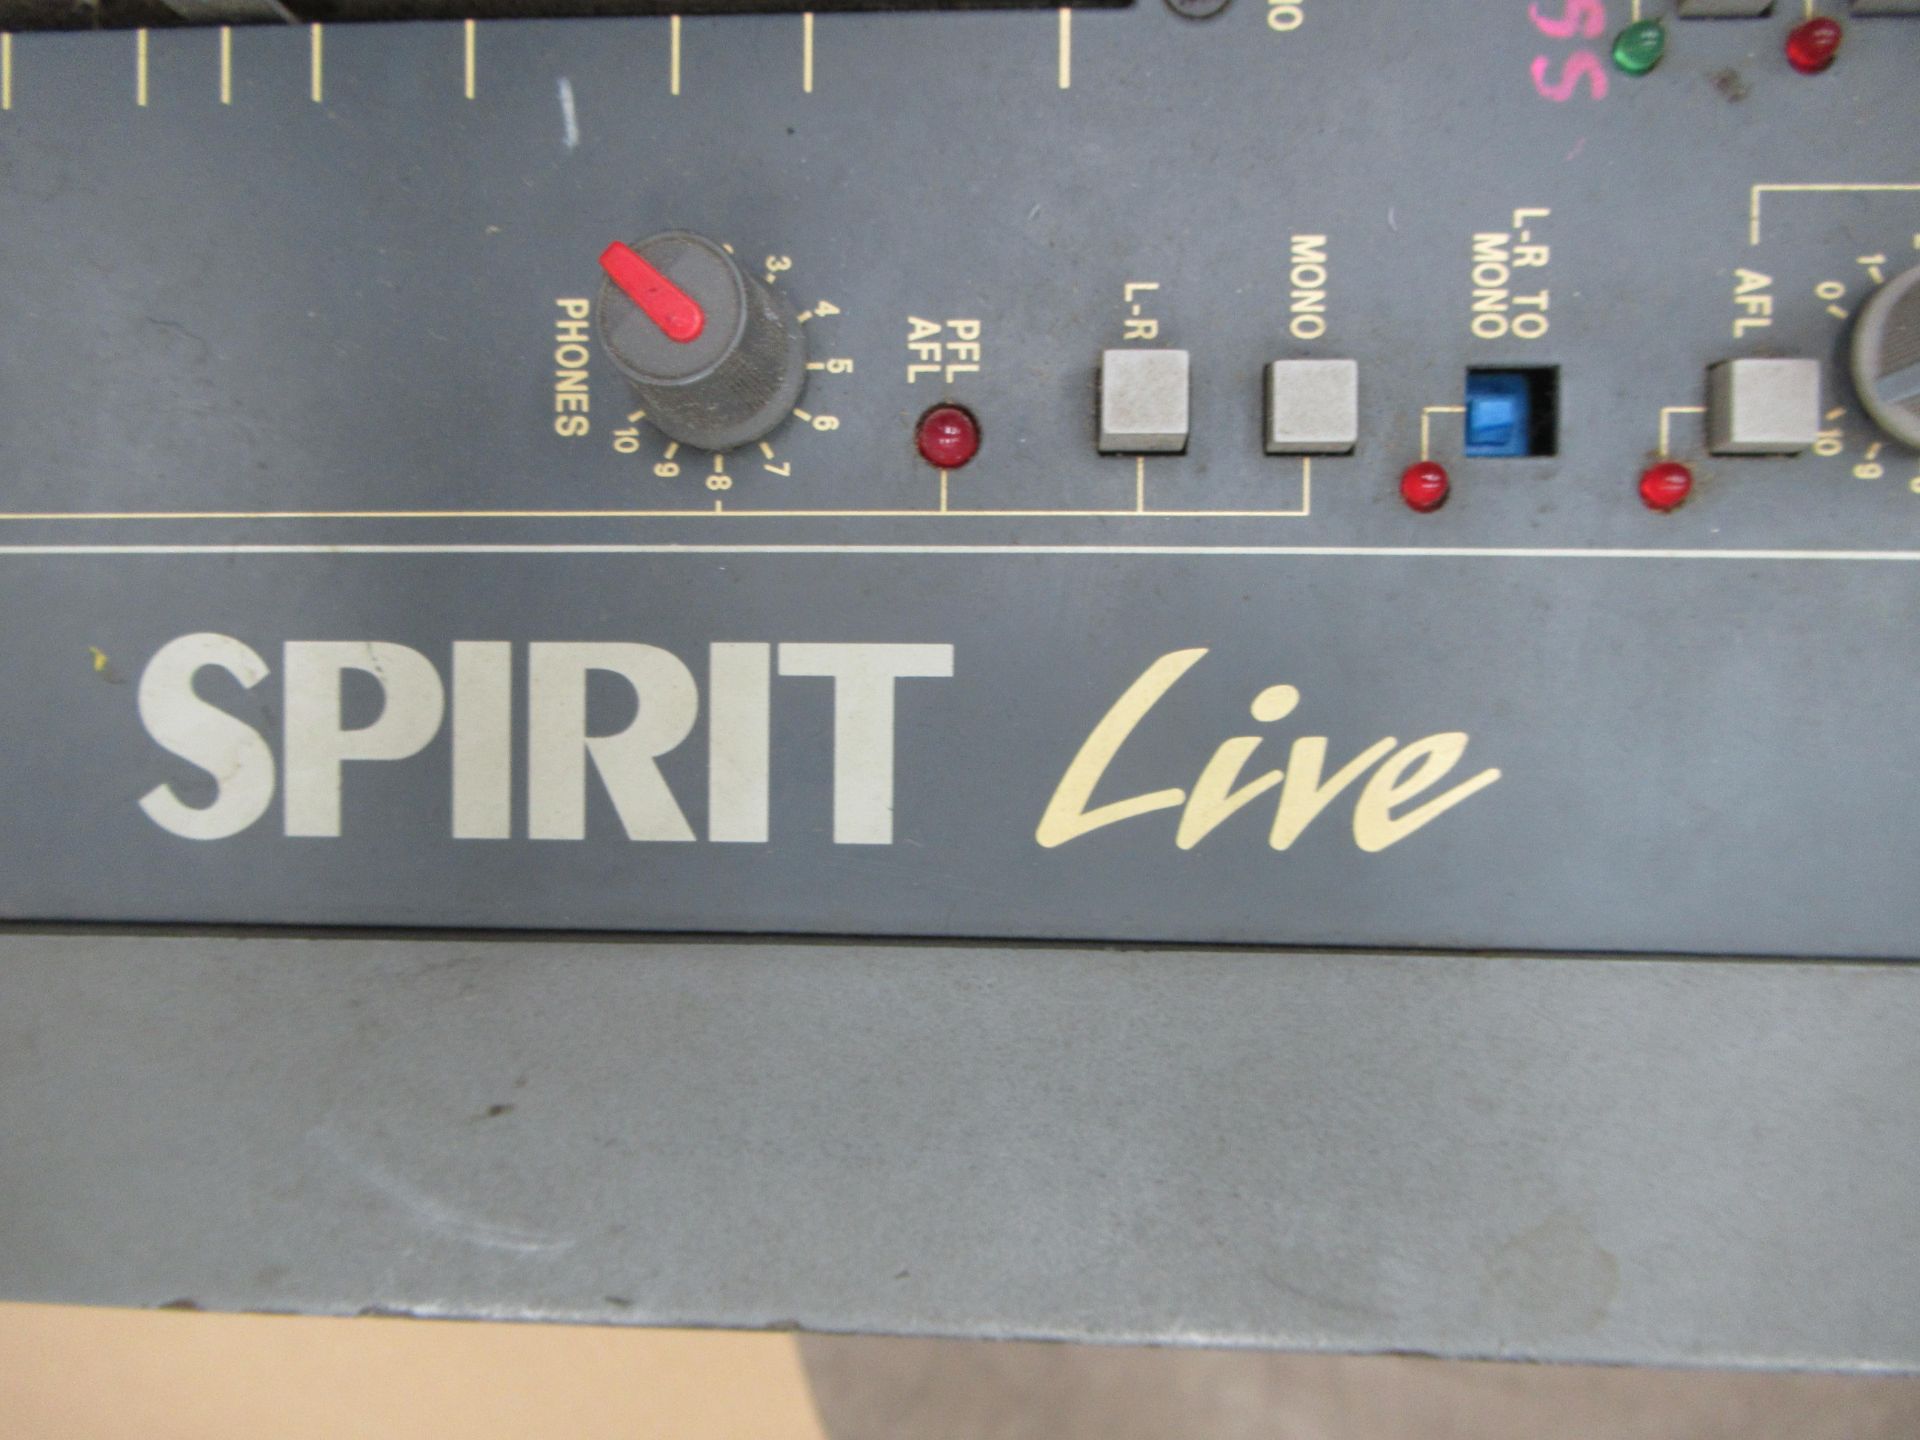 Spirit live mixing deck - Image 2 of 4